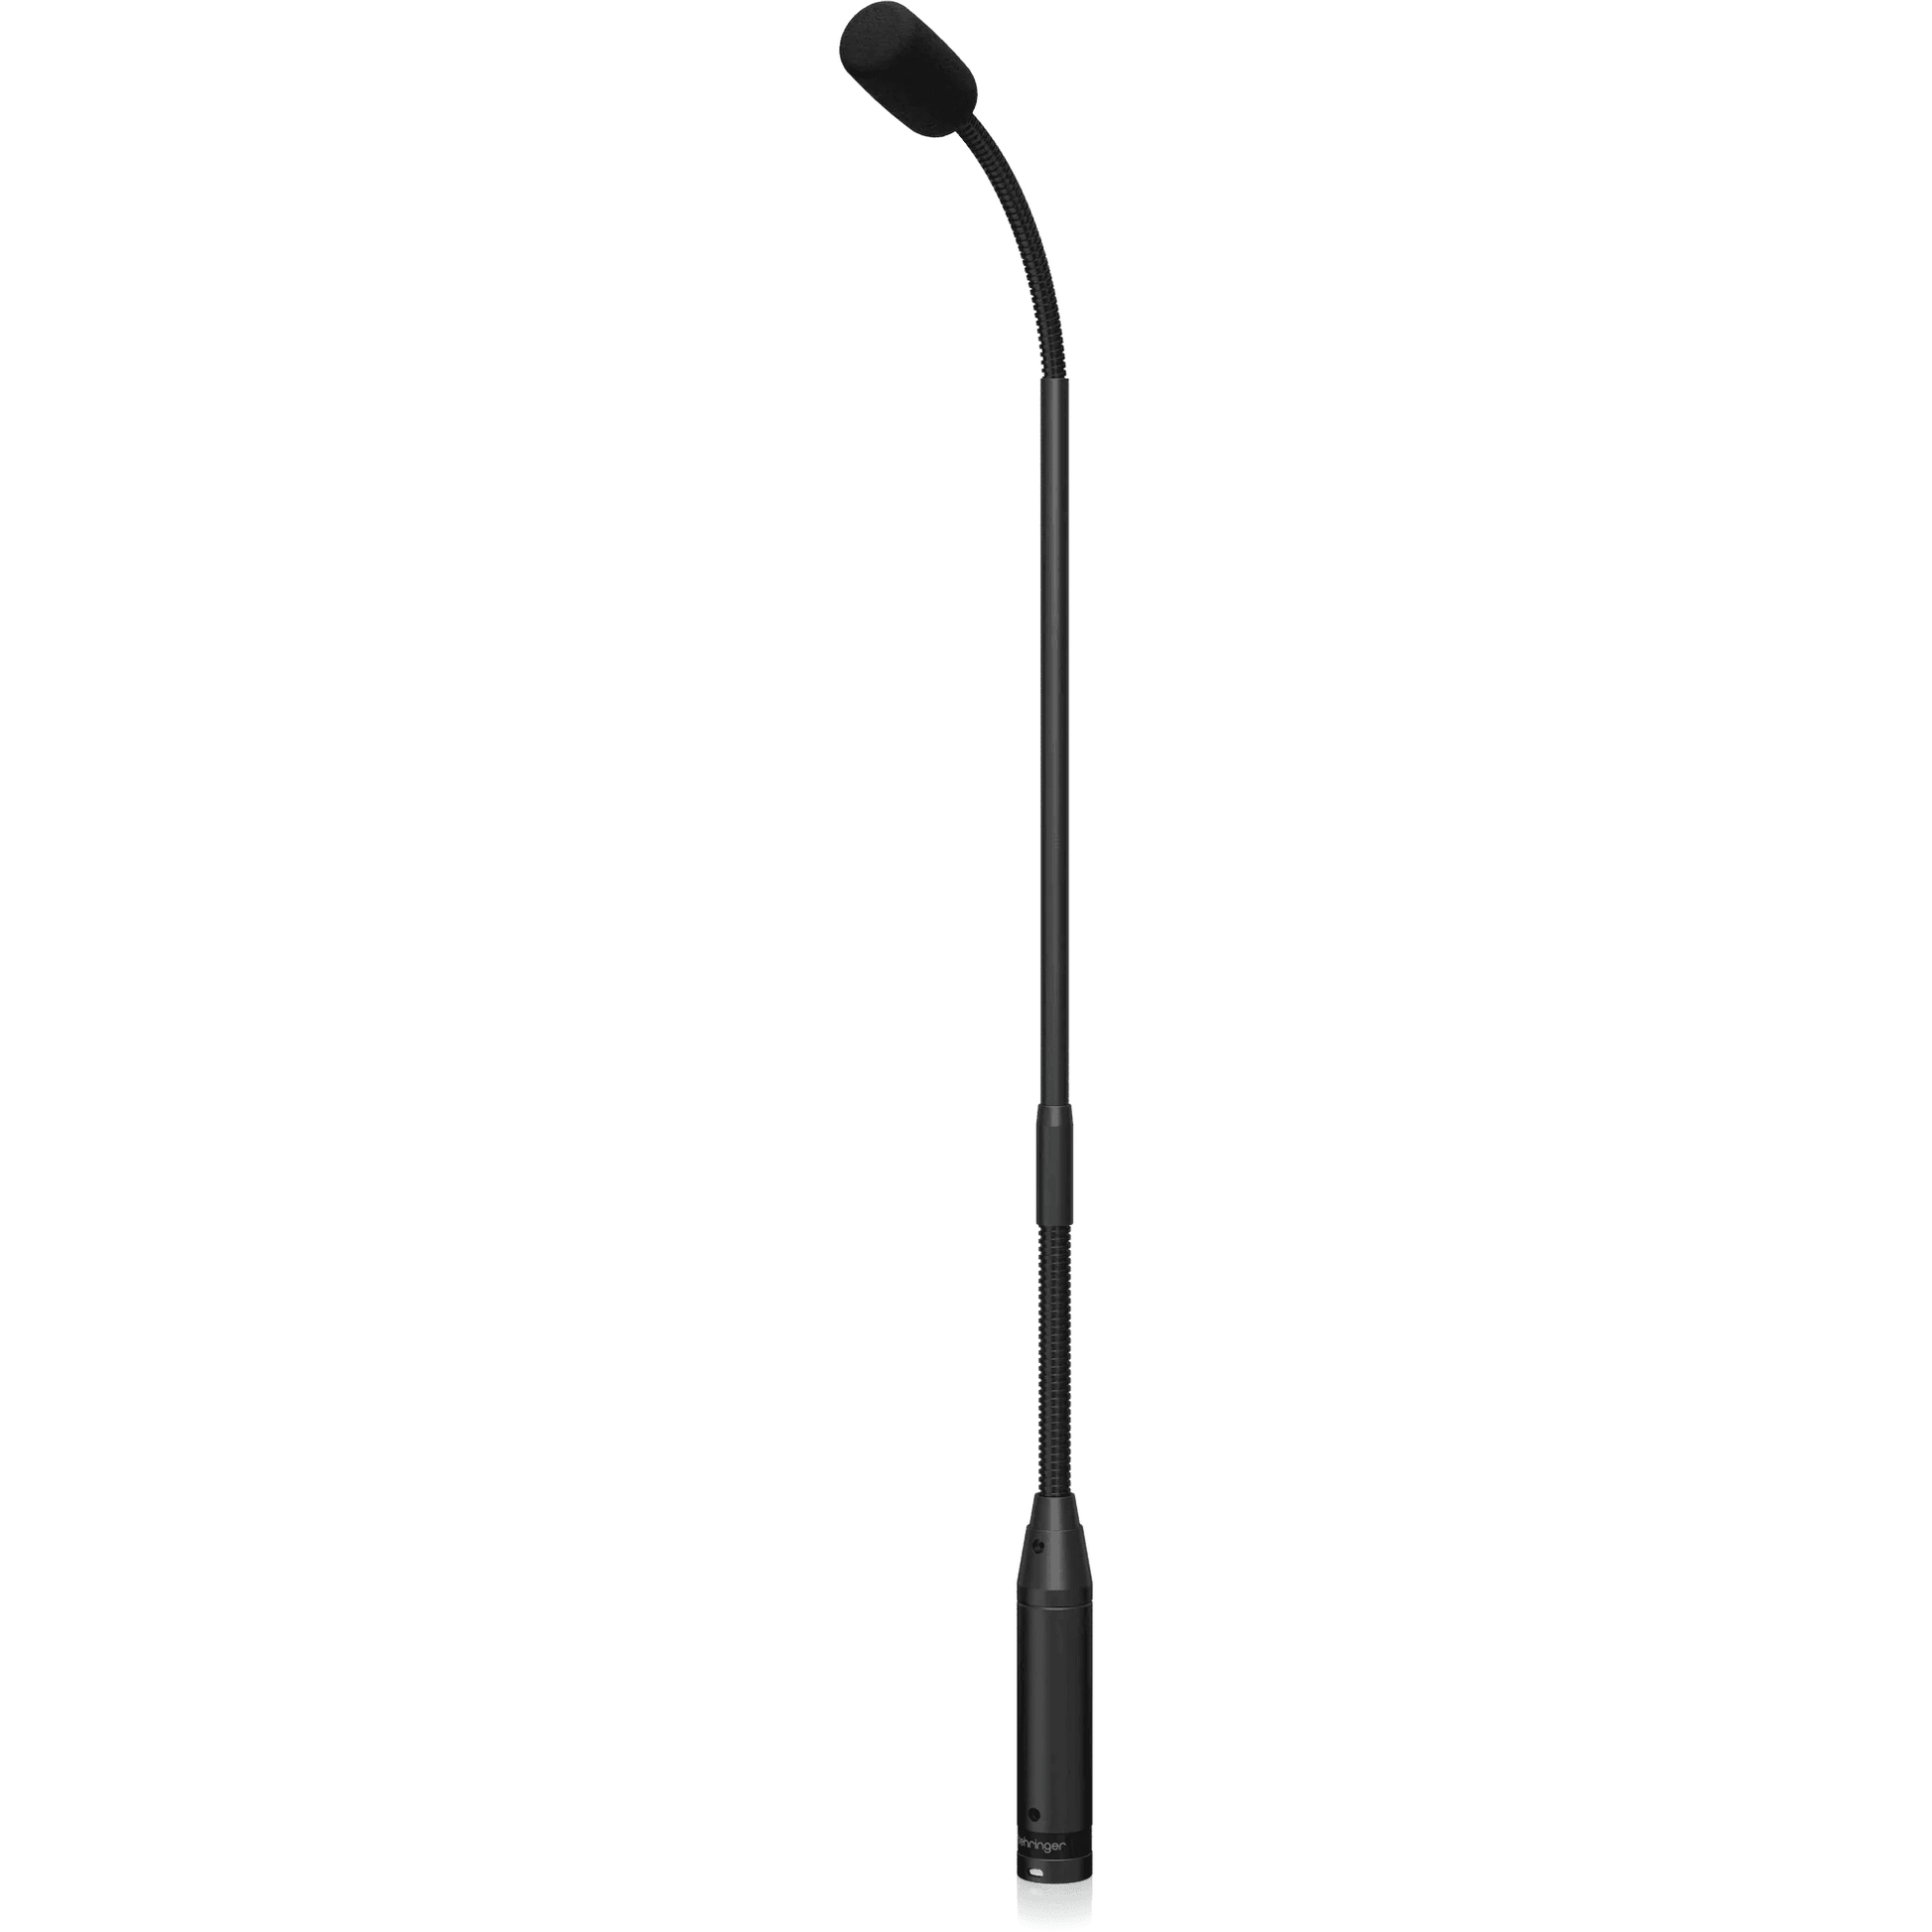 Behringer TA5212 Premium Condenser Gooseneck Microphone for Vocal Applications